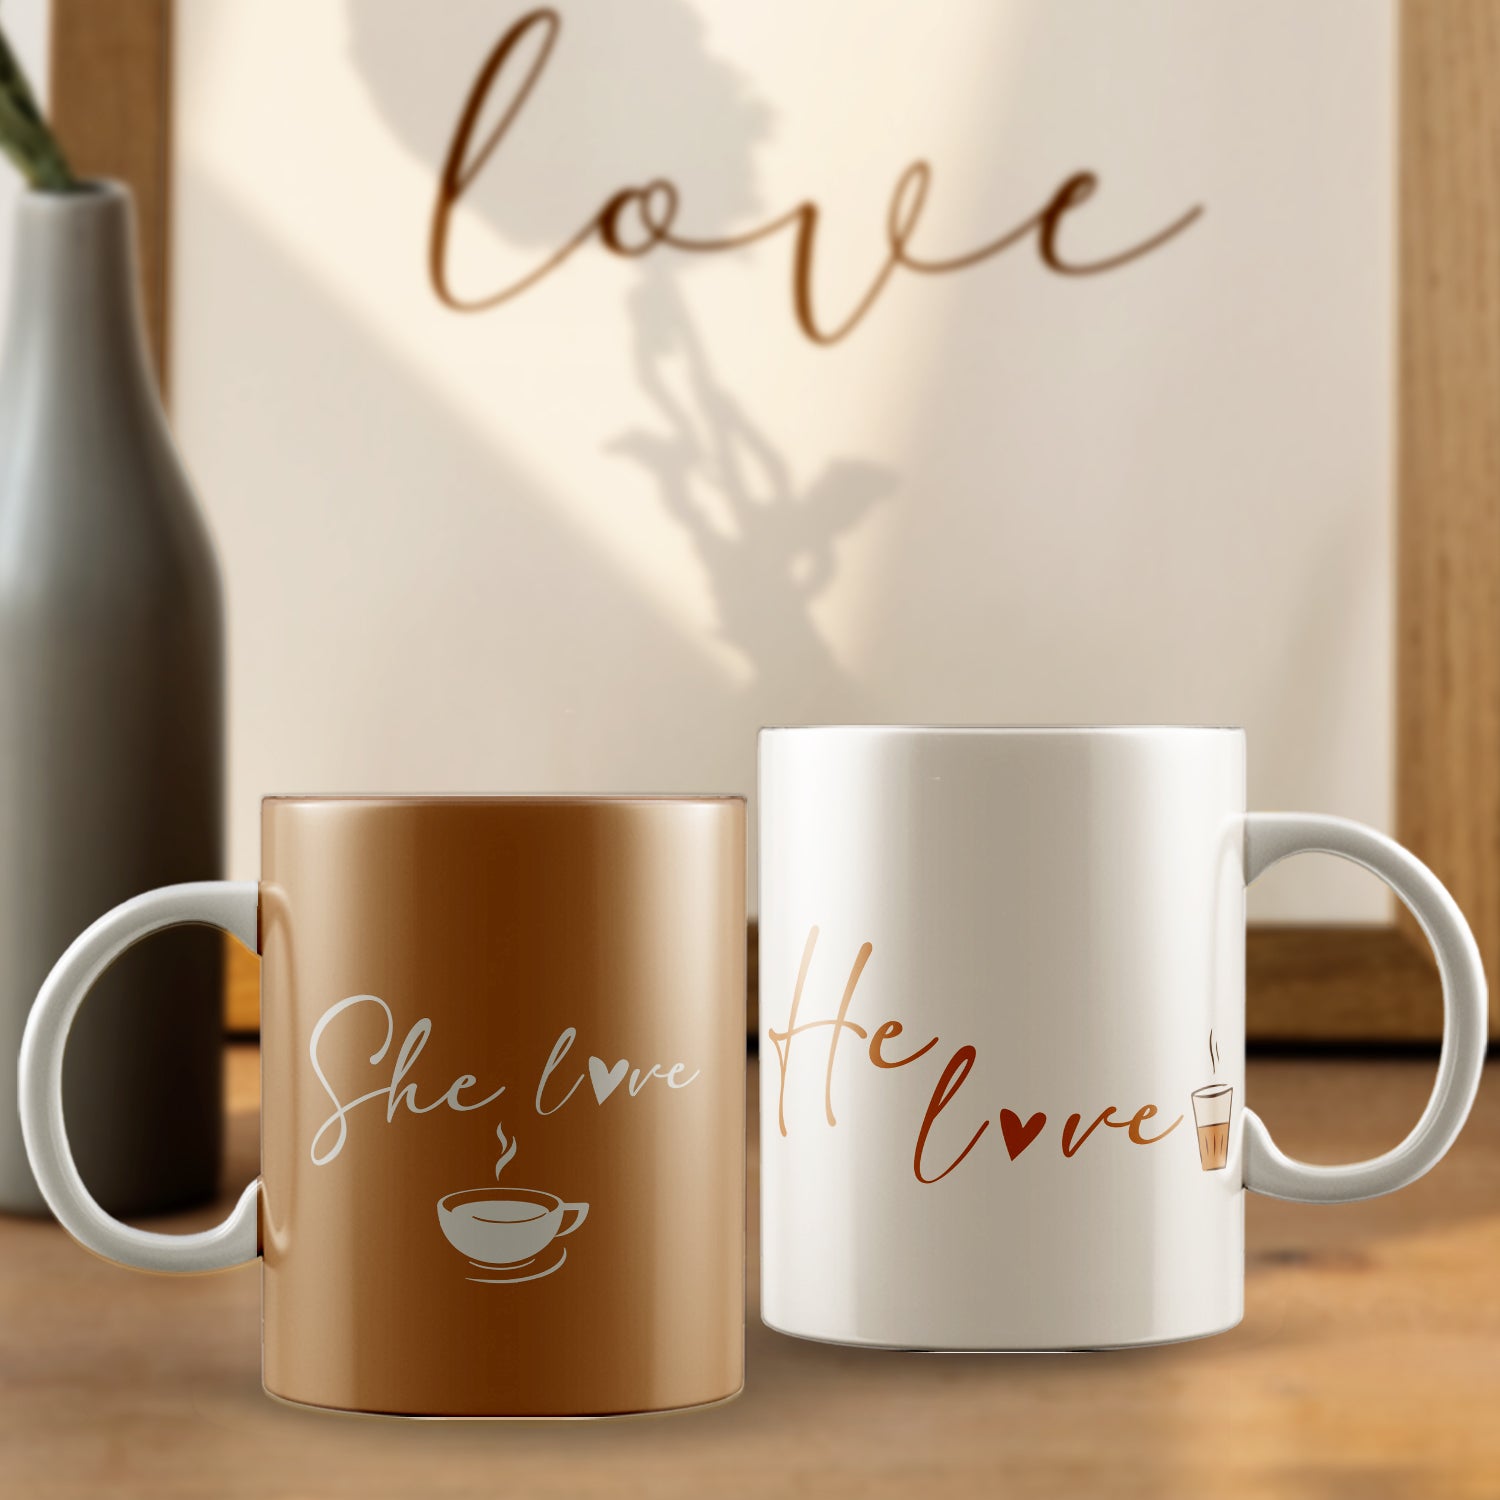 She Love - He Love Valentine Love Theme Ceramic Coffee/Tea Mugs 1